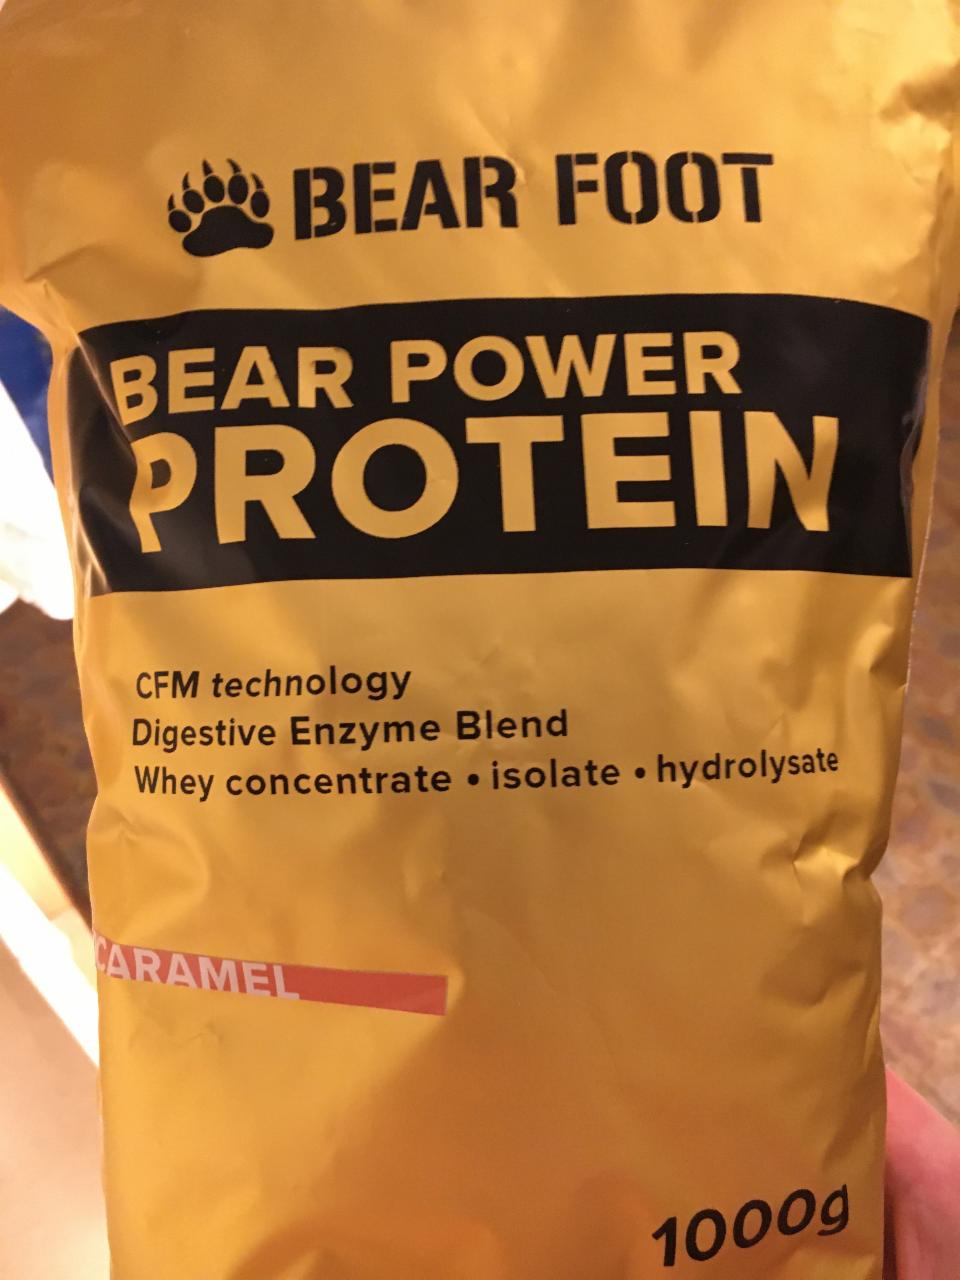 Fotografie - Protein Caramel Bear Foot